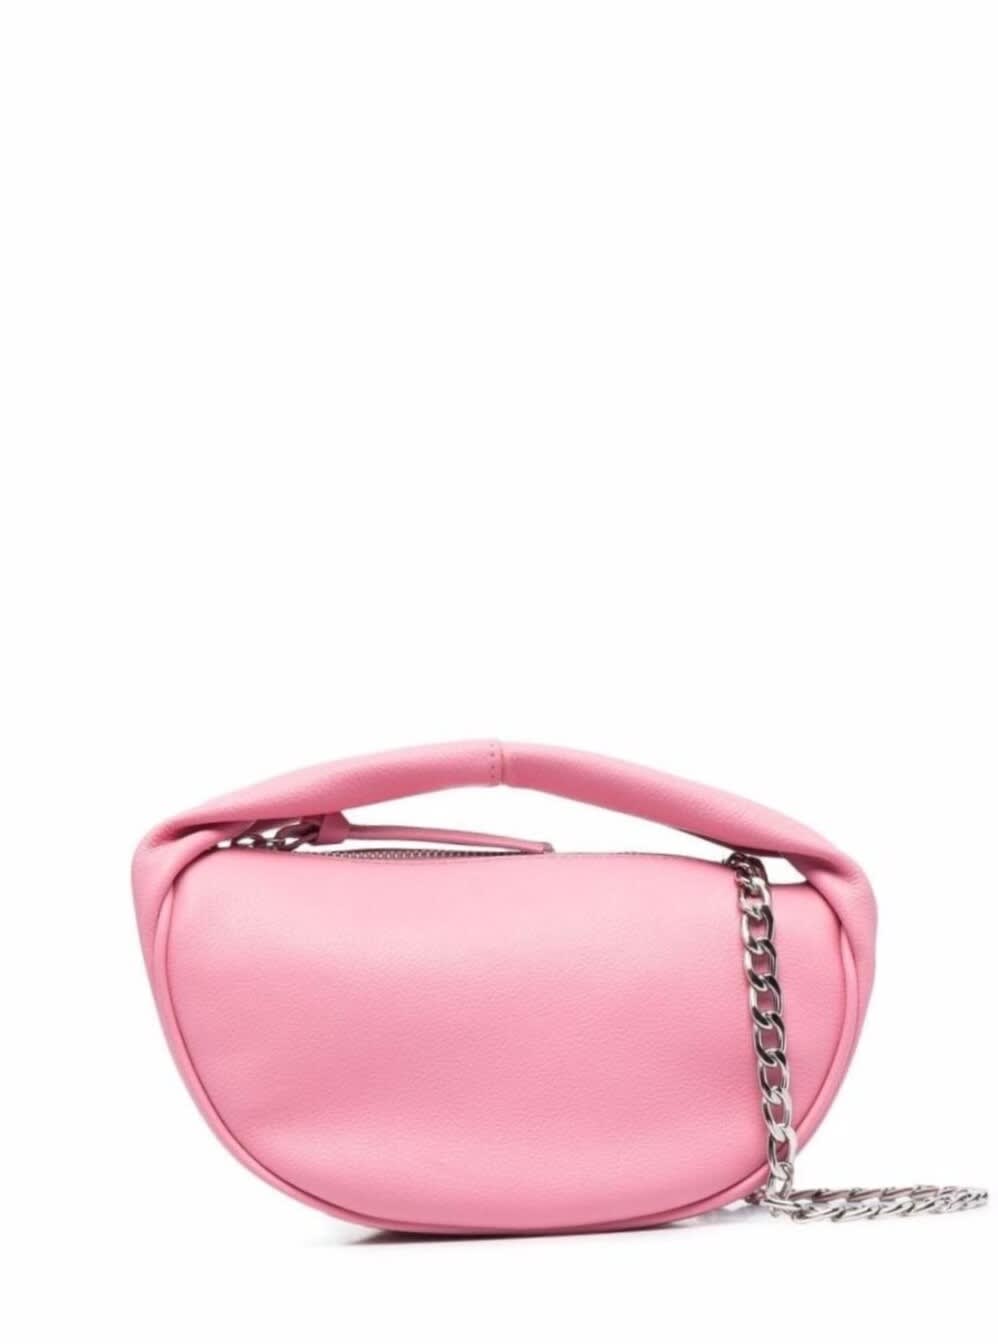 BY FAR Baby Cush Pink Leather Handbag